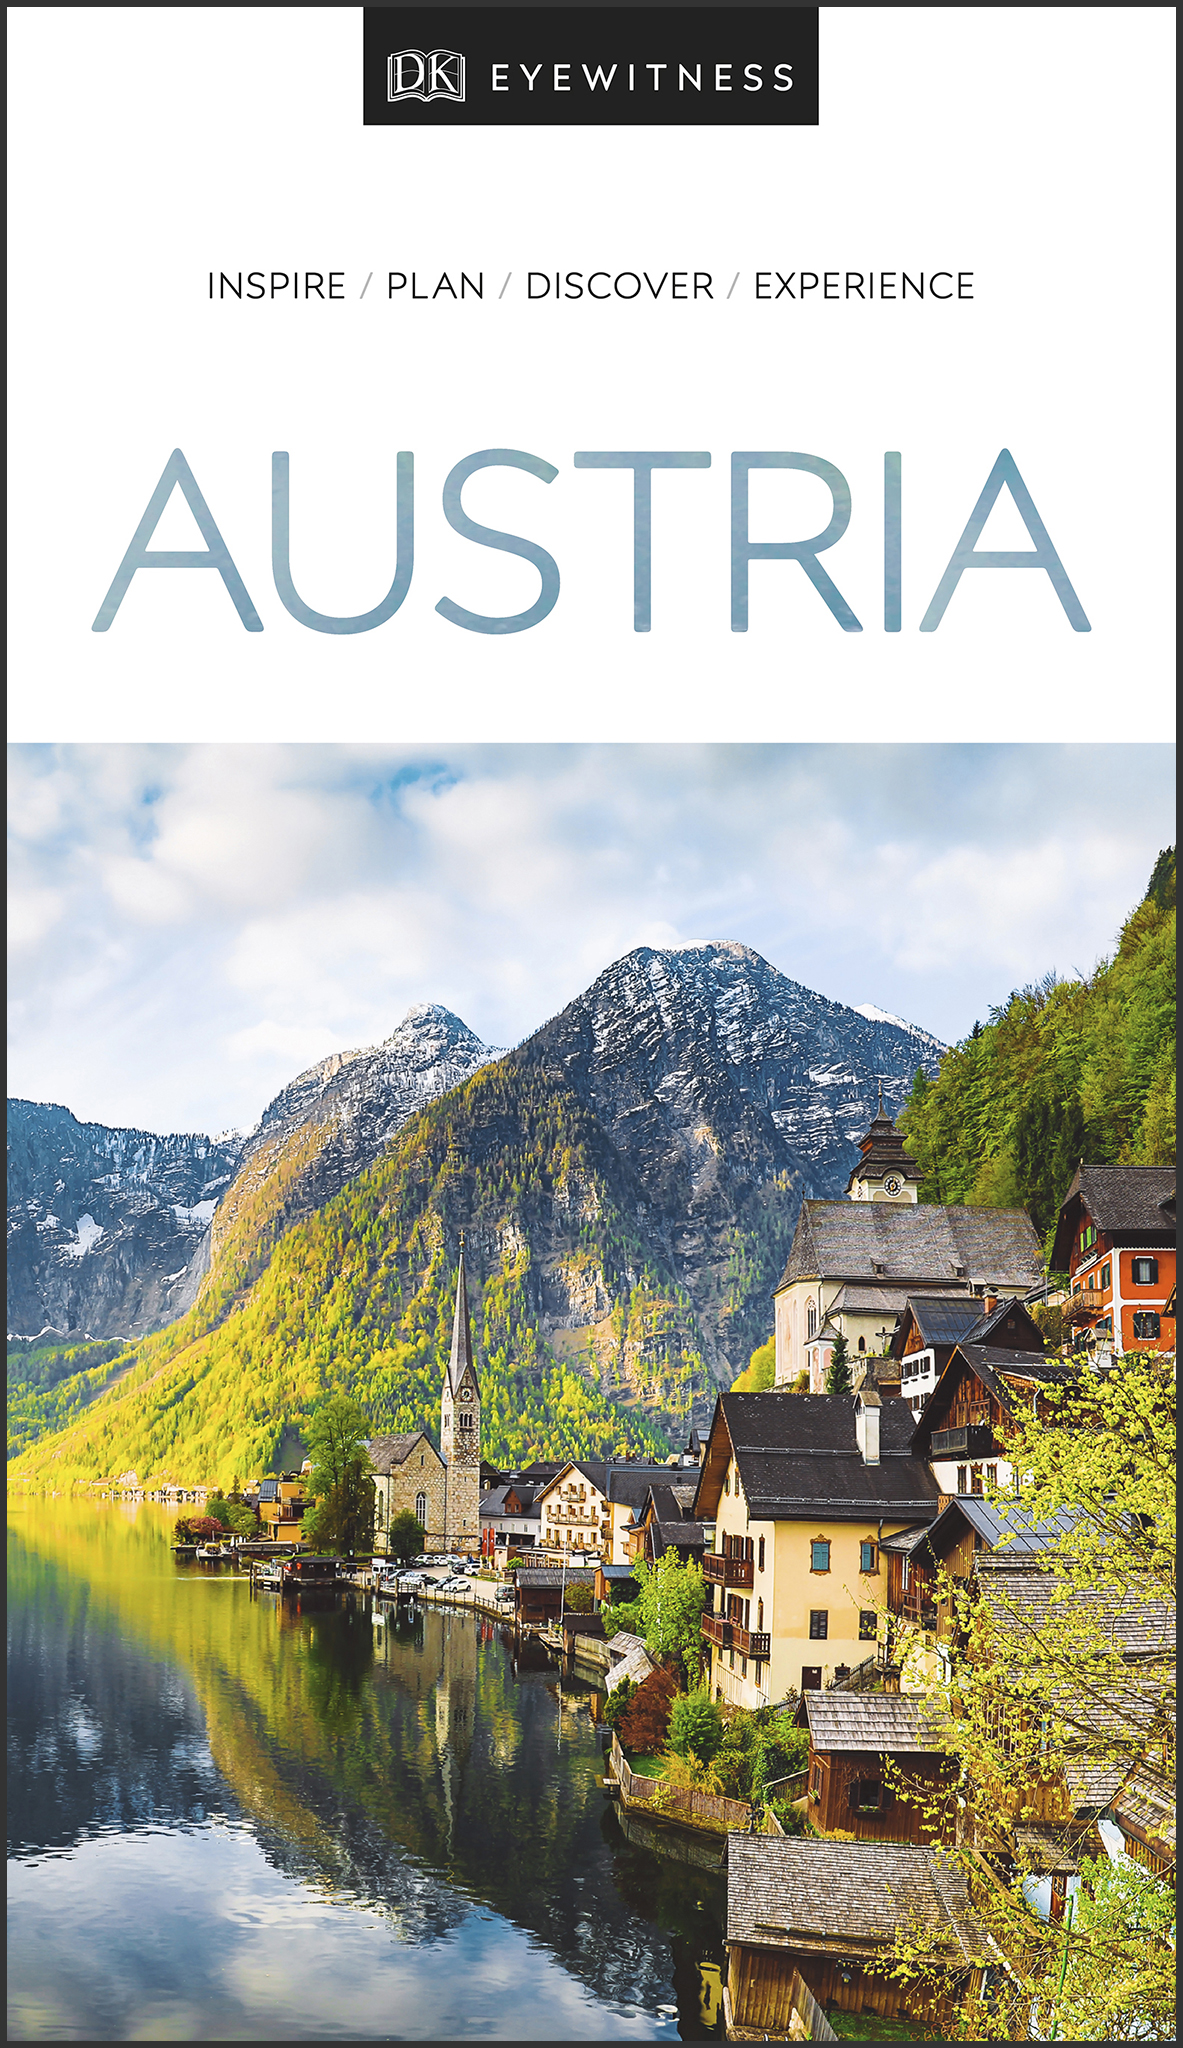 AUSTRIA INSPIRE PLAN DISCOVER EXPERIENCE contents Discover Austria - photo 1